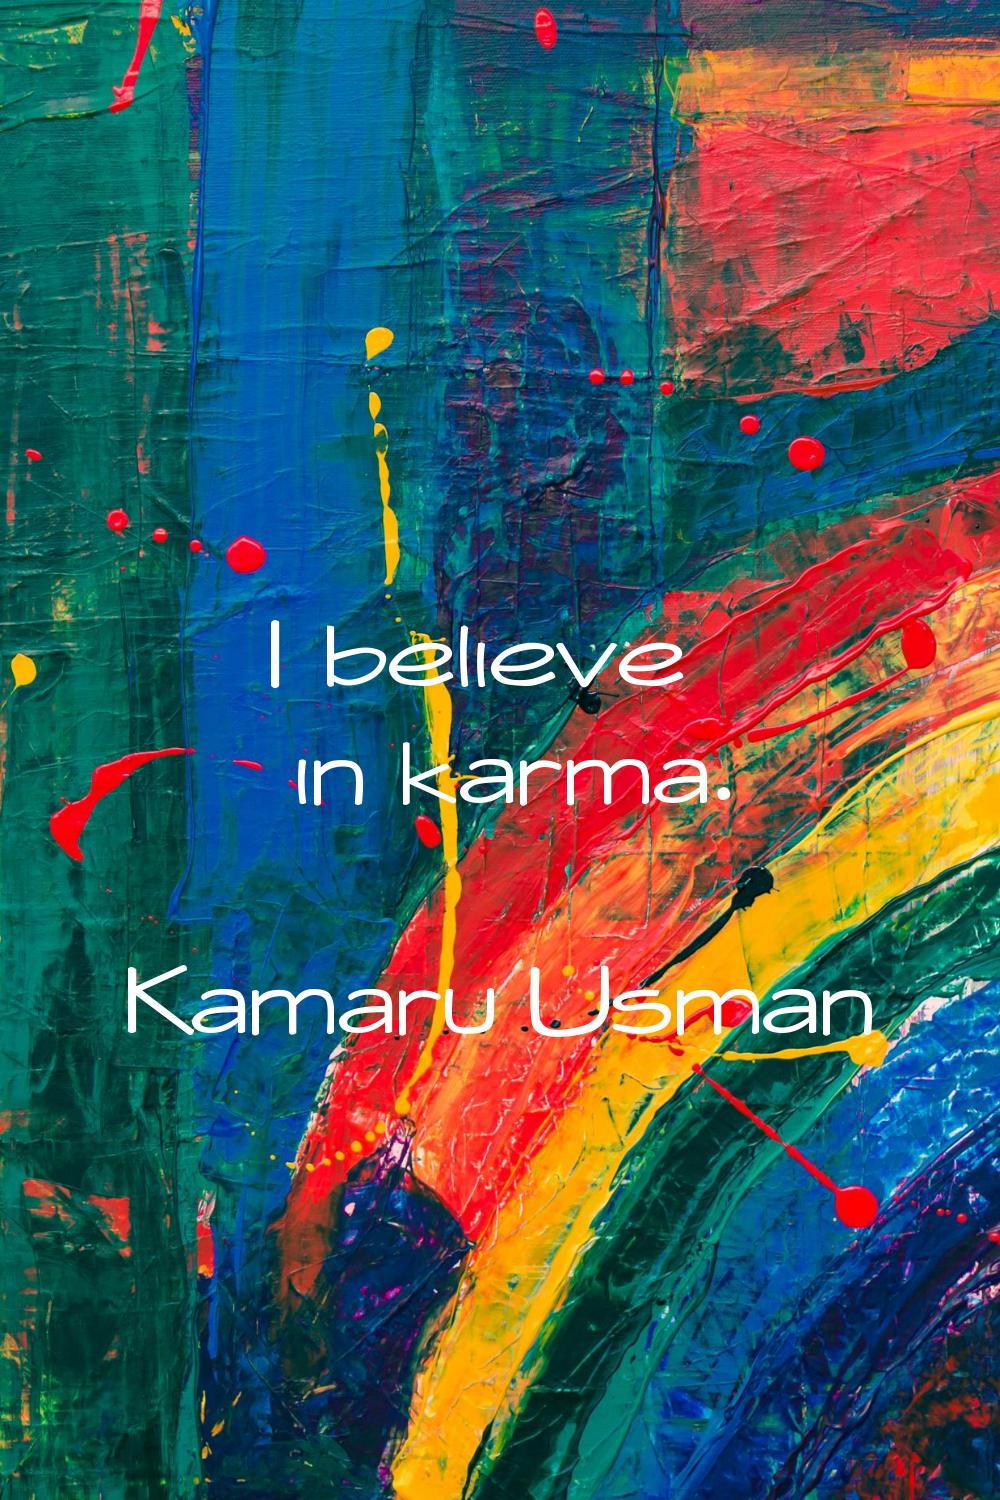 I believe in karma.